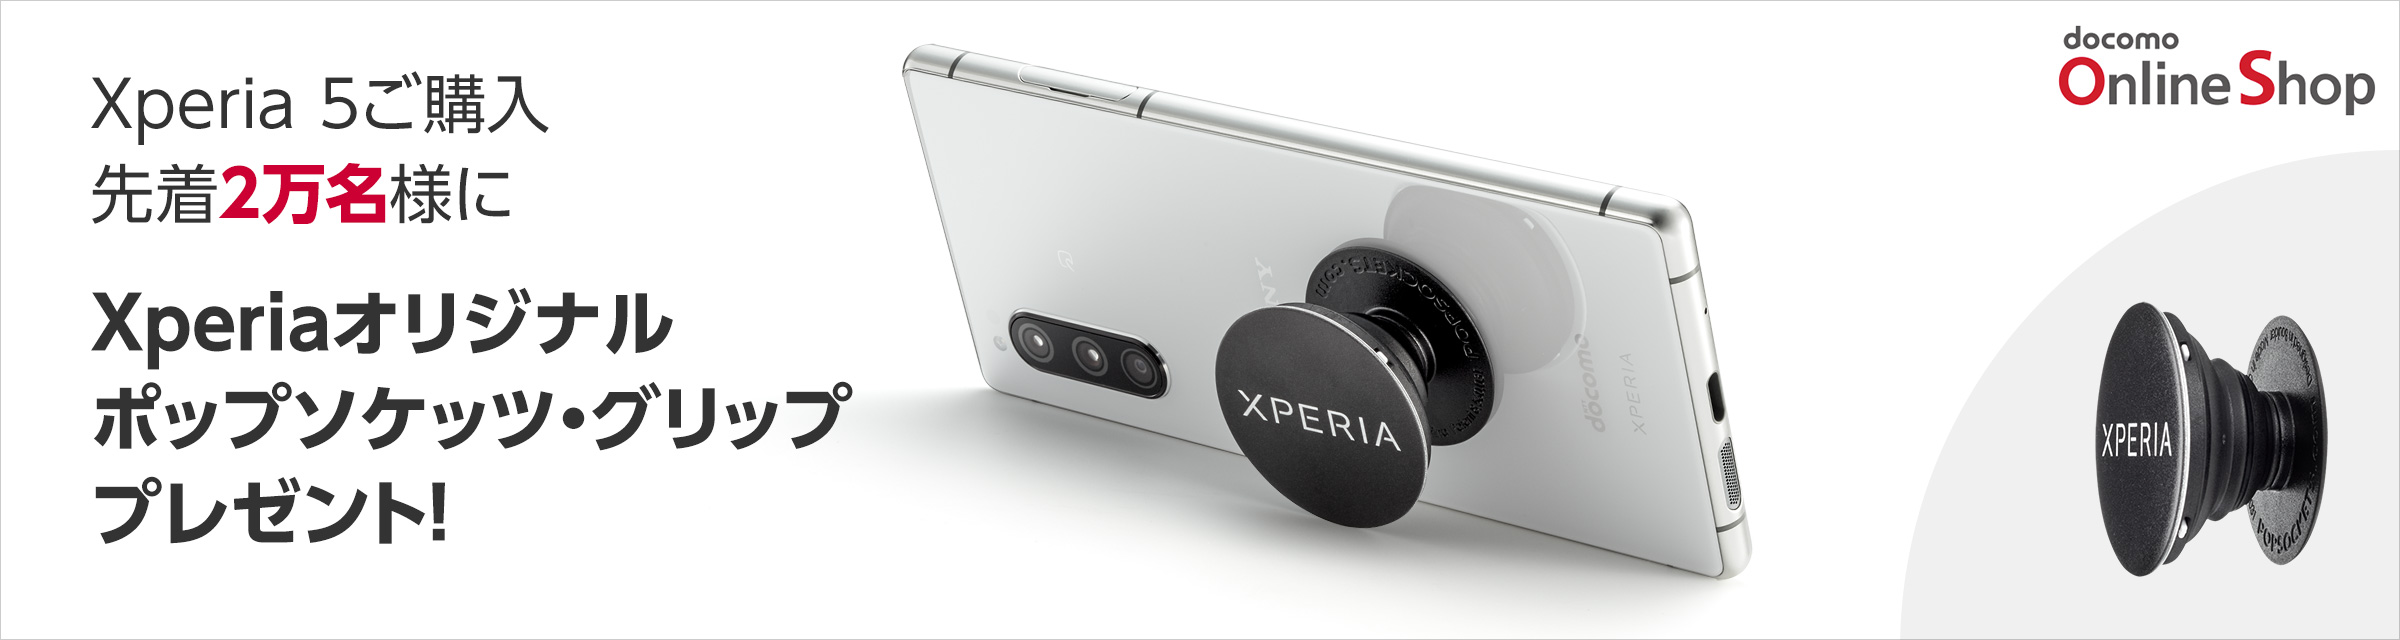 Xperia 5発売記念キャンペーン Xperia 5ご購入の先着2万名様にXperiaオリジナルポップソケッツ・グリッププレゼント！